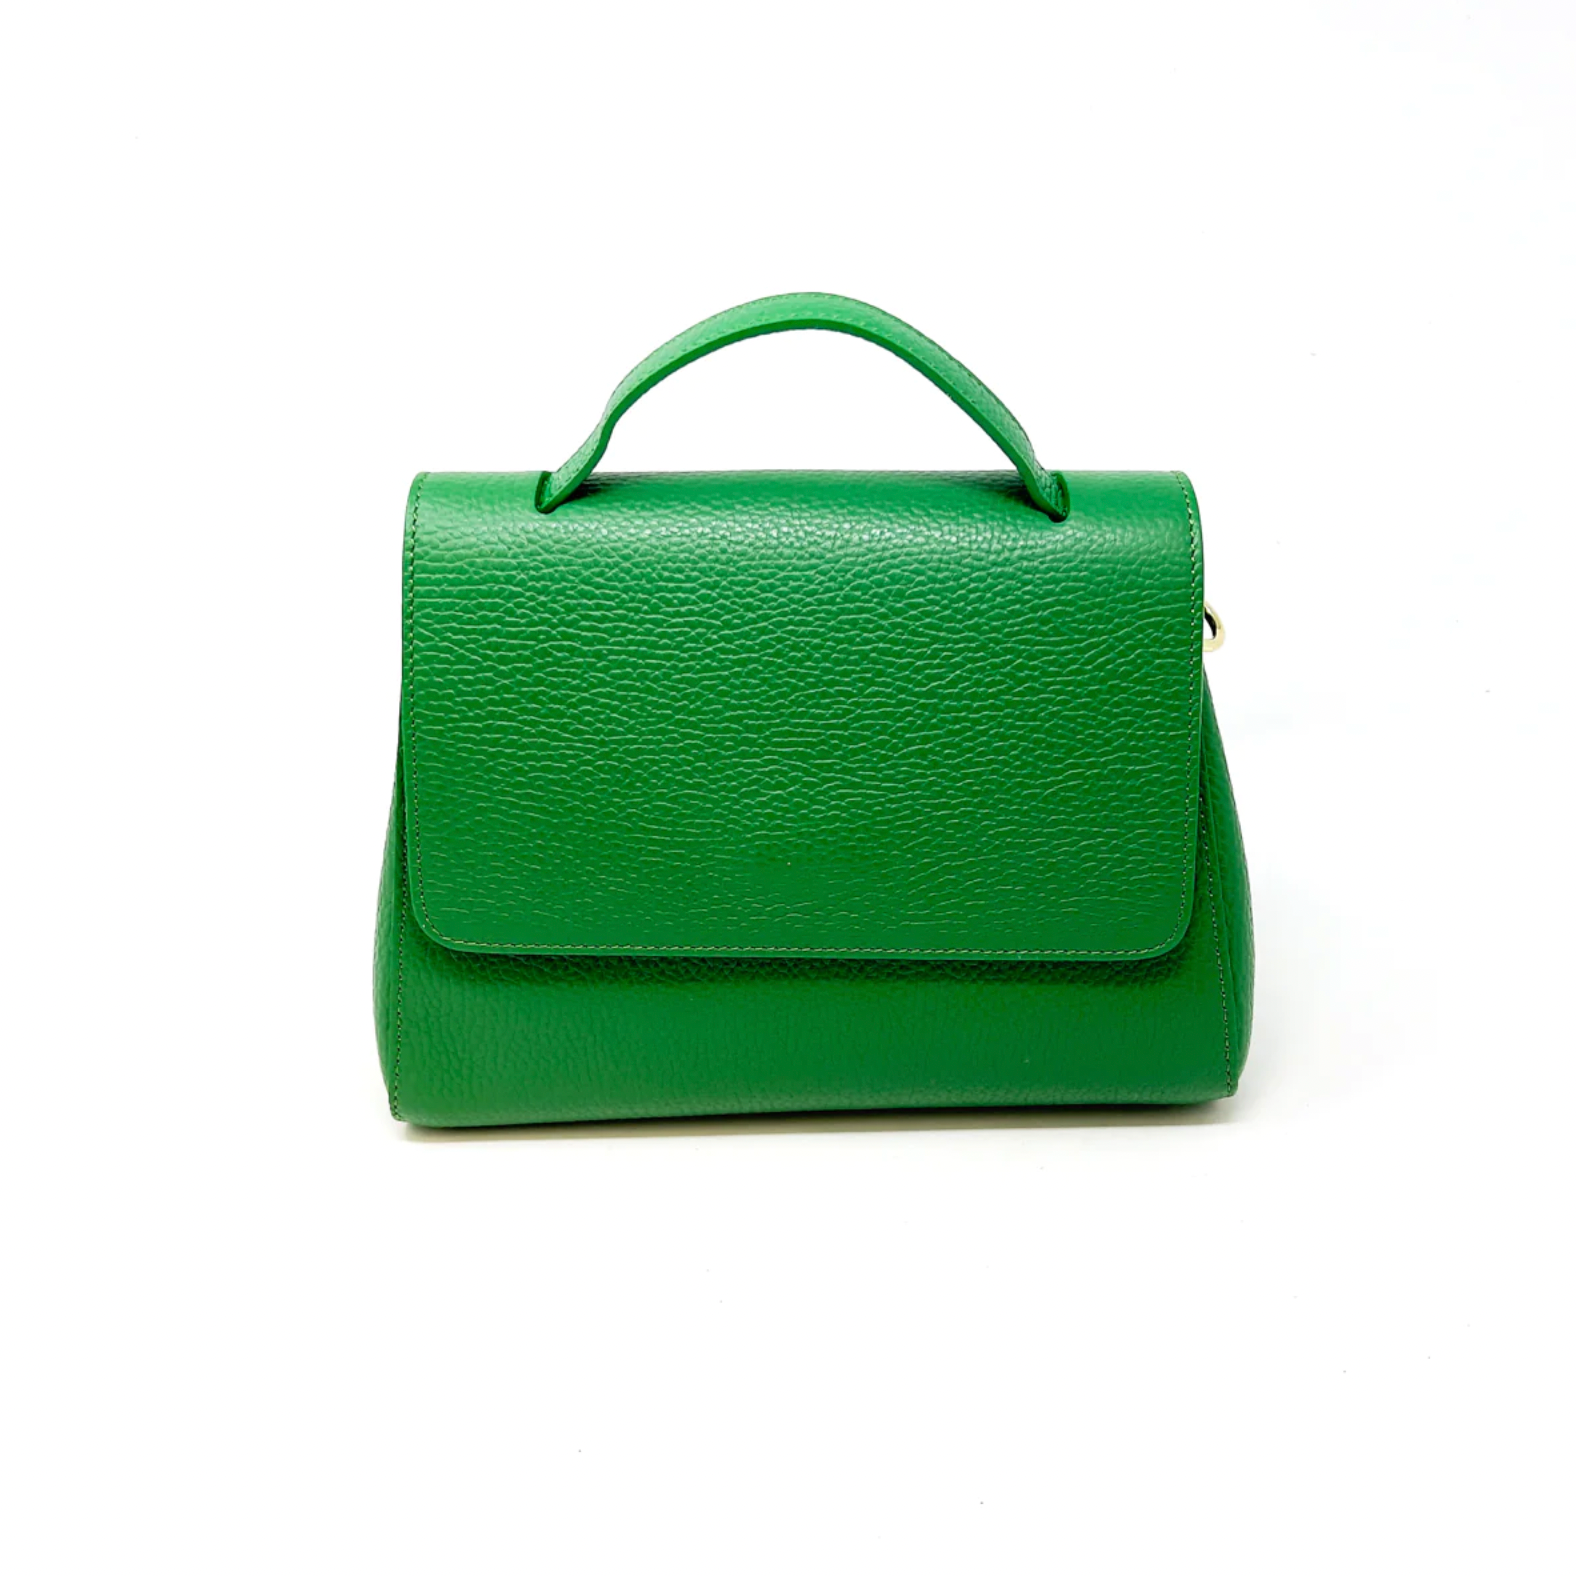 Kelly Green Leather Handbag